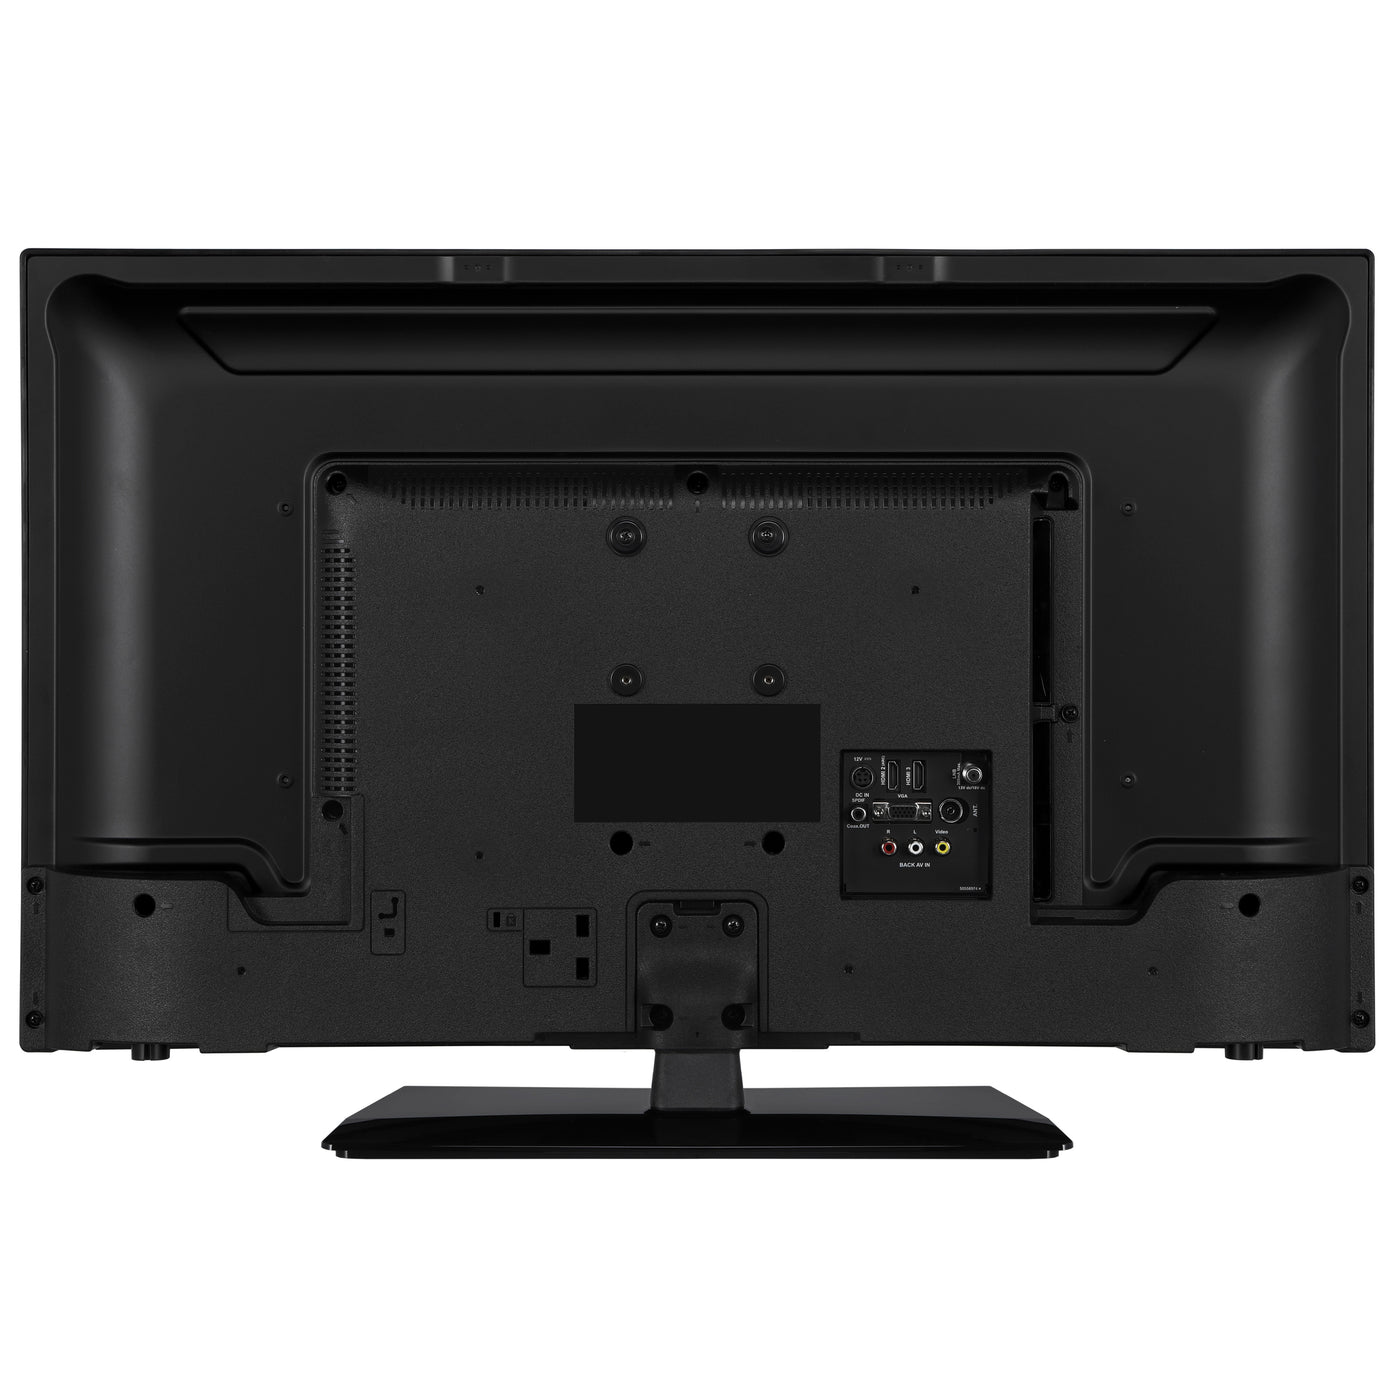 LENCO LED-3263BK - 32" Android Smart TV with 12V car adapter, black